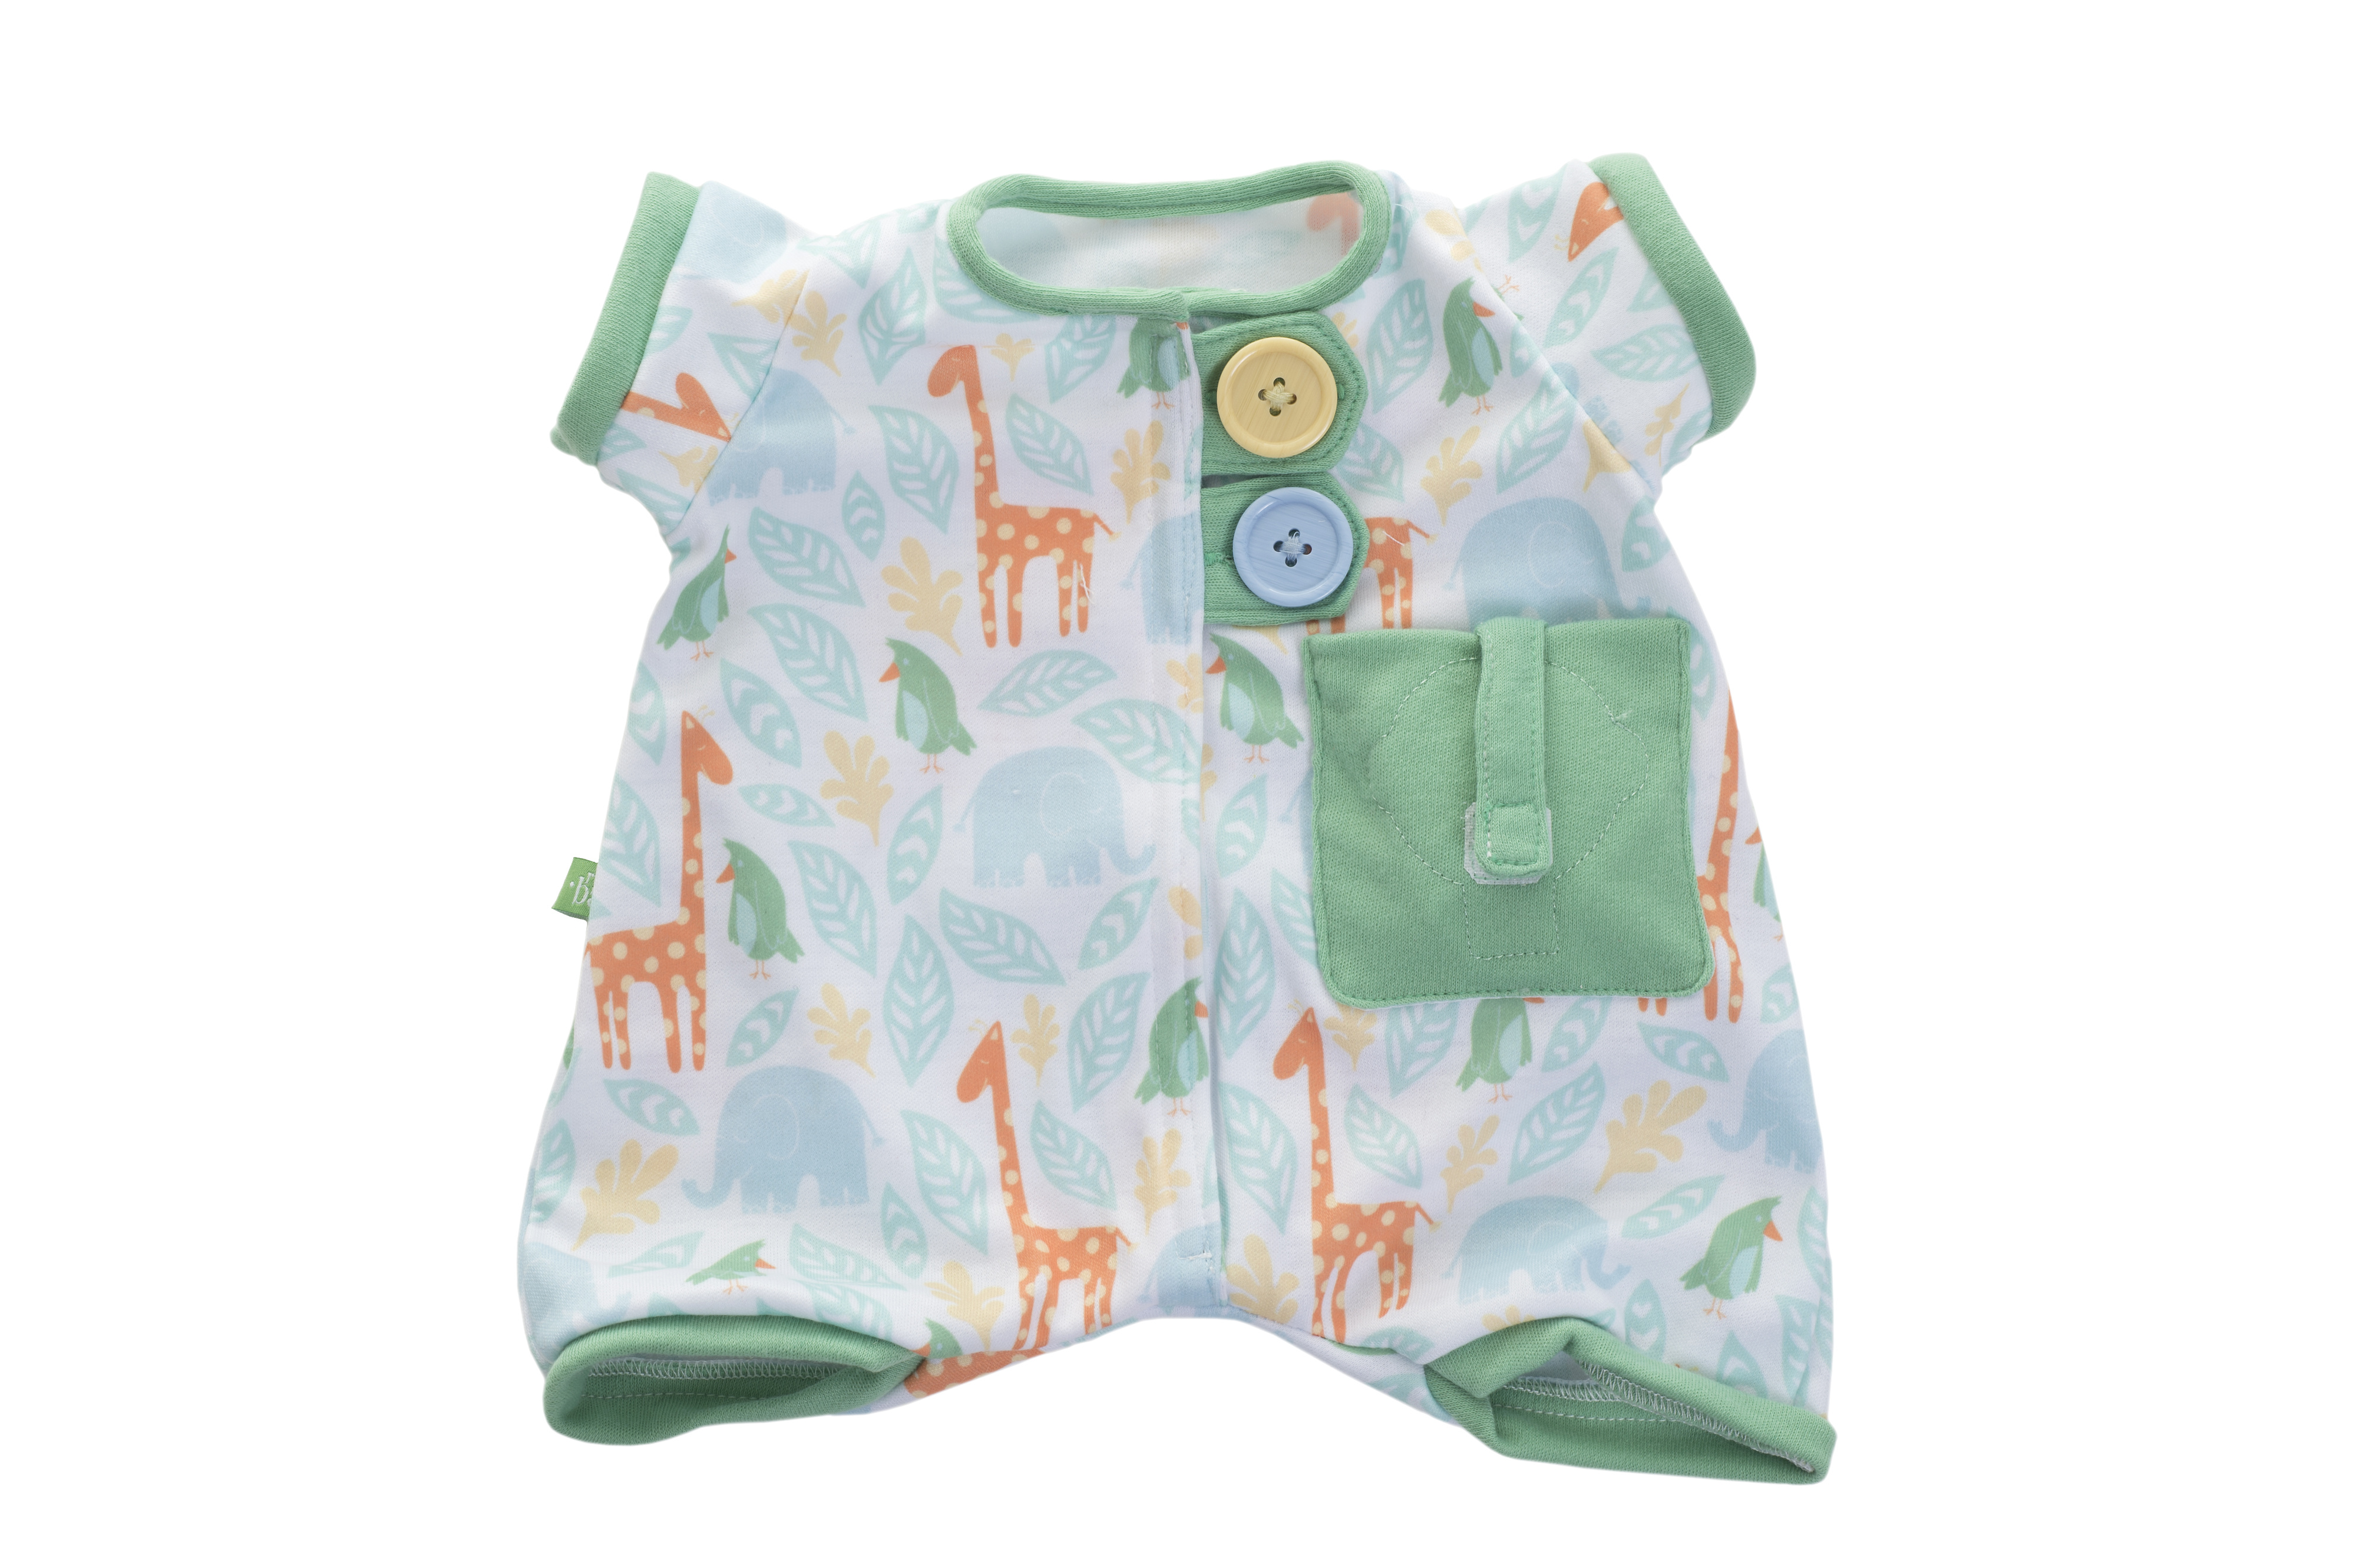 Outlet rubens barn doll clothes green pajamas baby